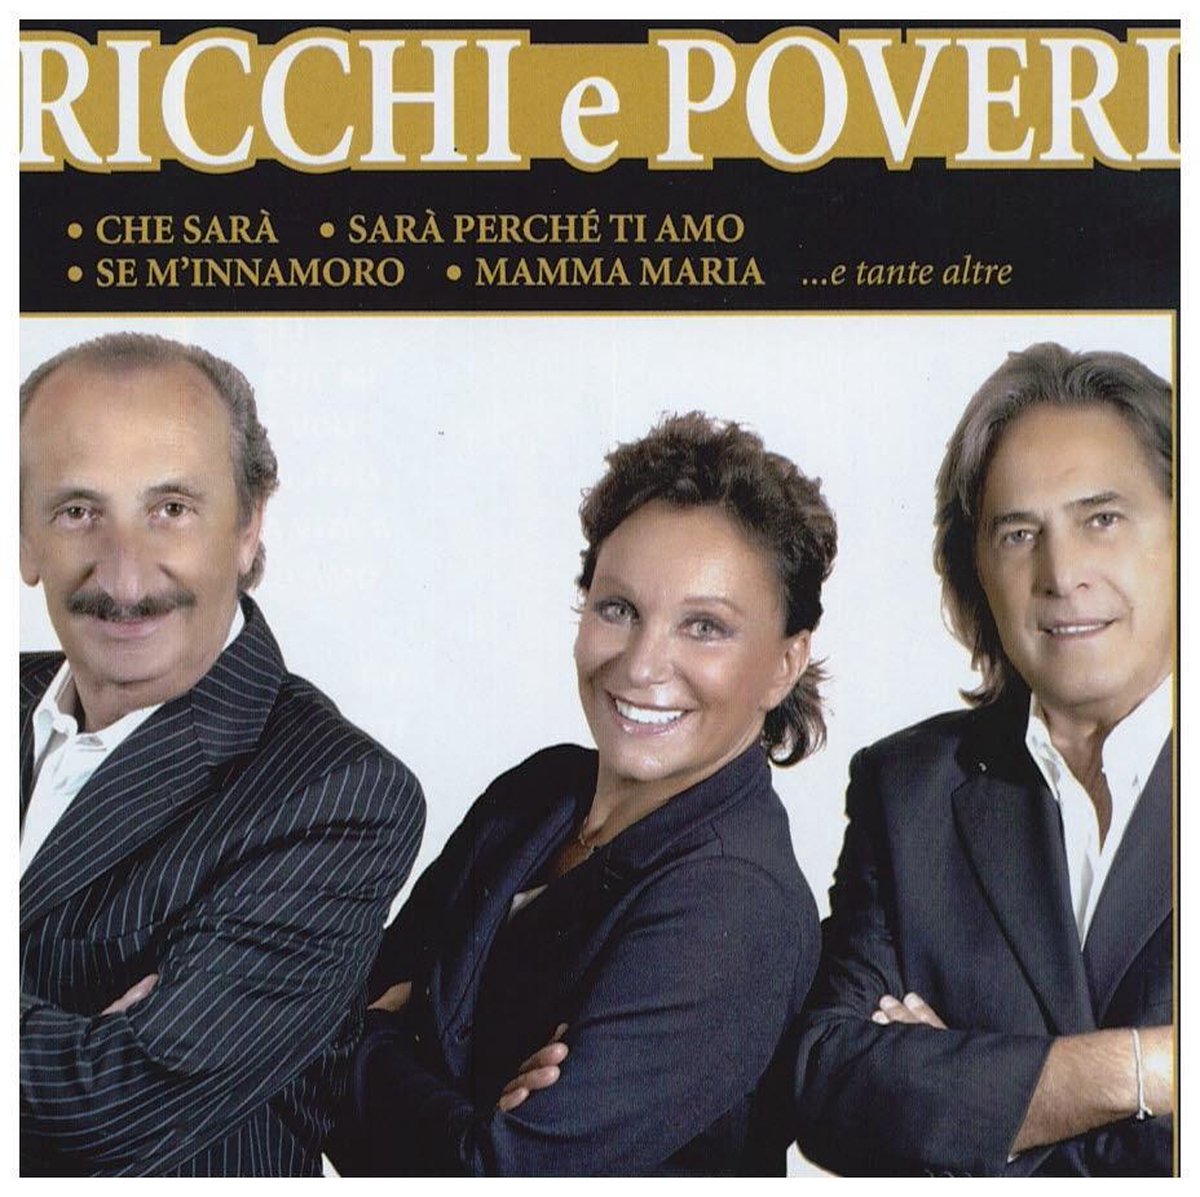 Группа Ricchi e Poveri альбомы. Ricchi e Poveri Постер. Обложка CD диска Ricchi e Poveri mamma Maria. Трио Рики э повери диск. Рикке э повери песни